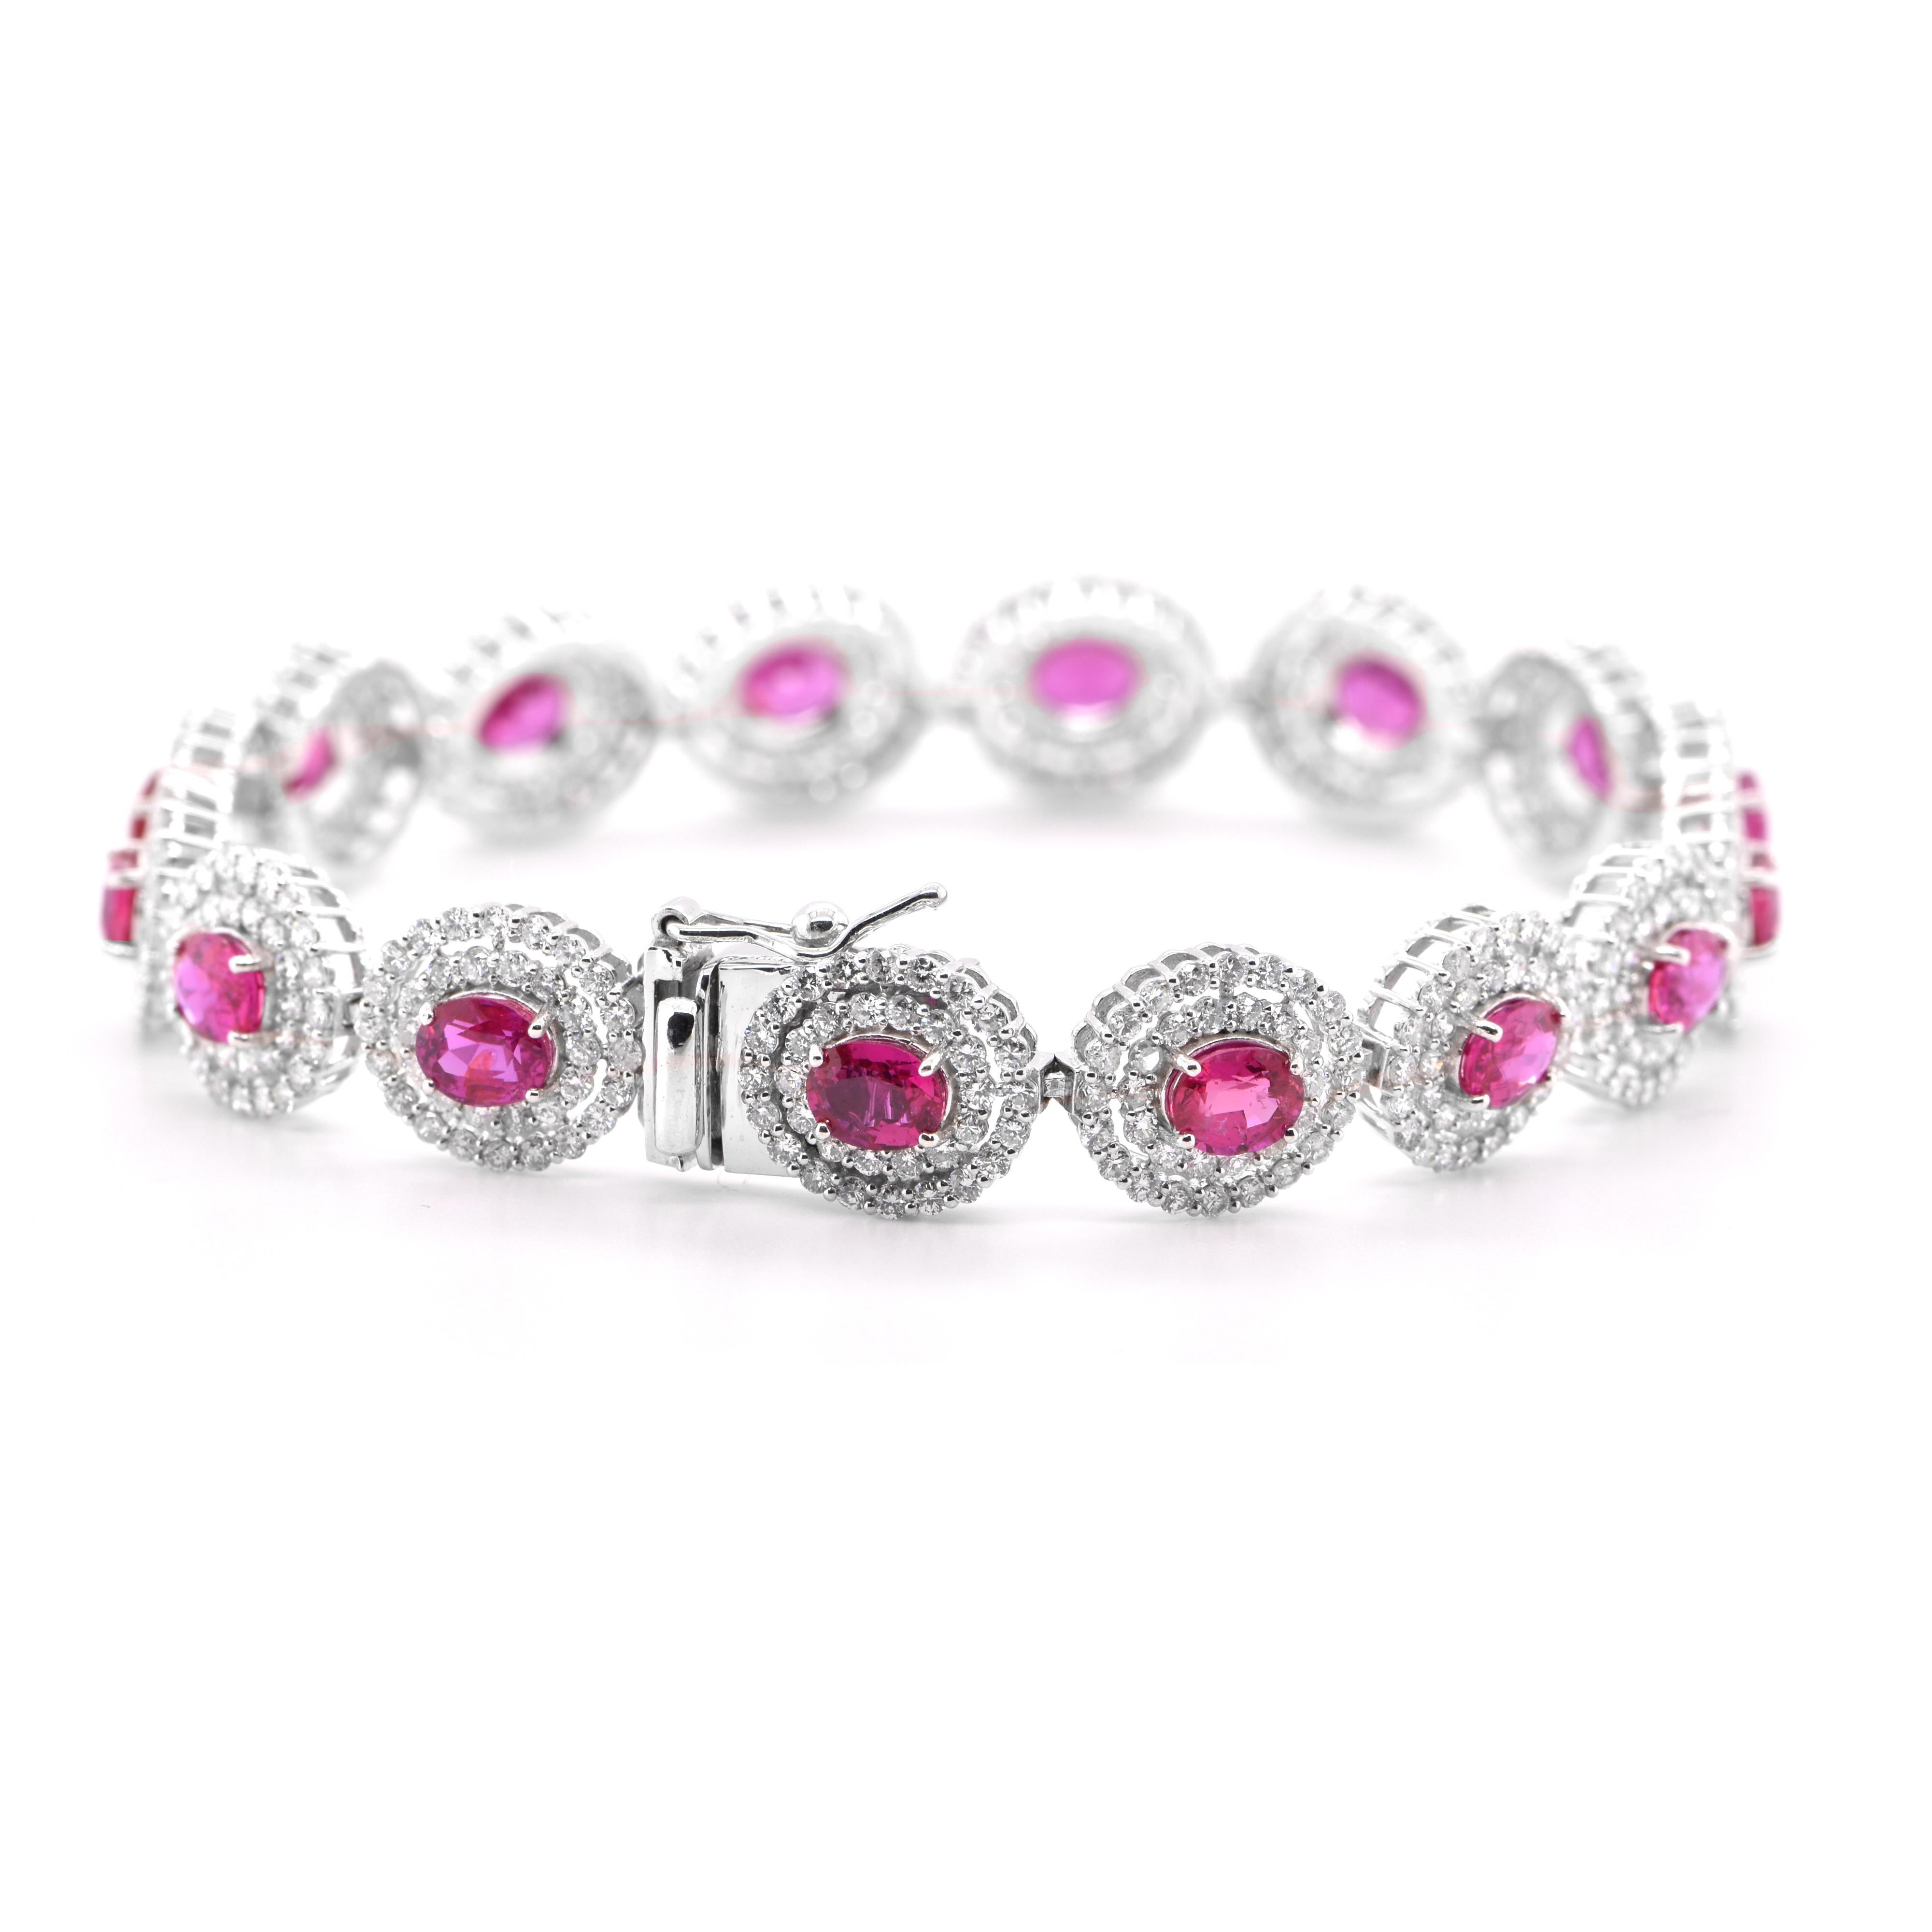 Modern 7.36 Carats Natural Unheated Rubies and Diamonds Tennis Bracelet Set in Platinum